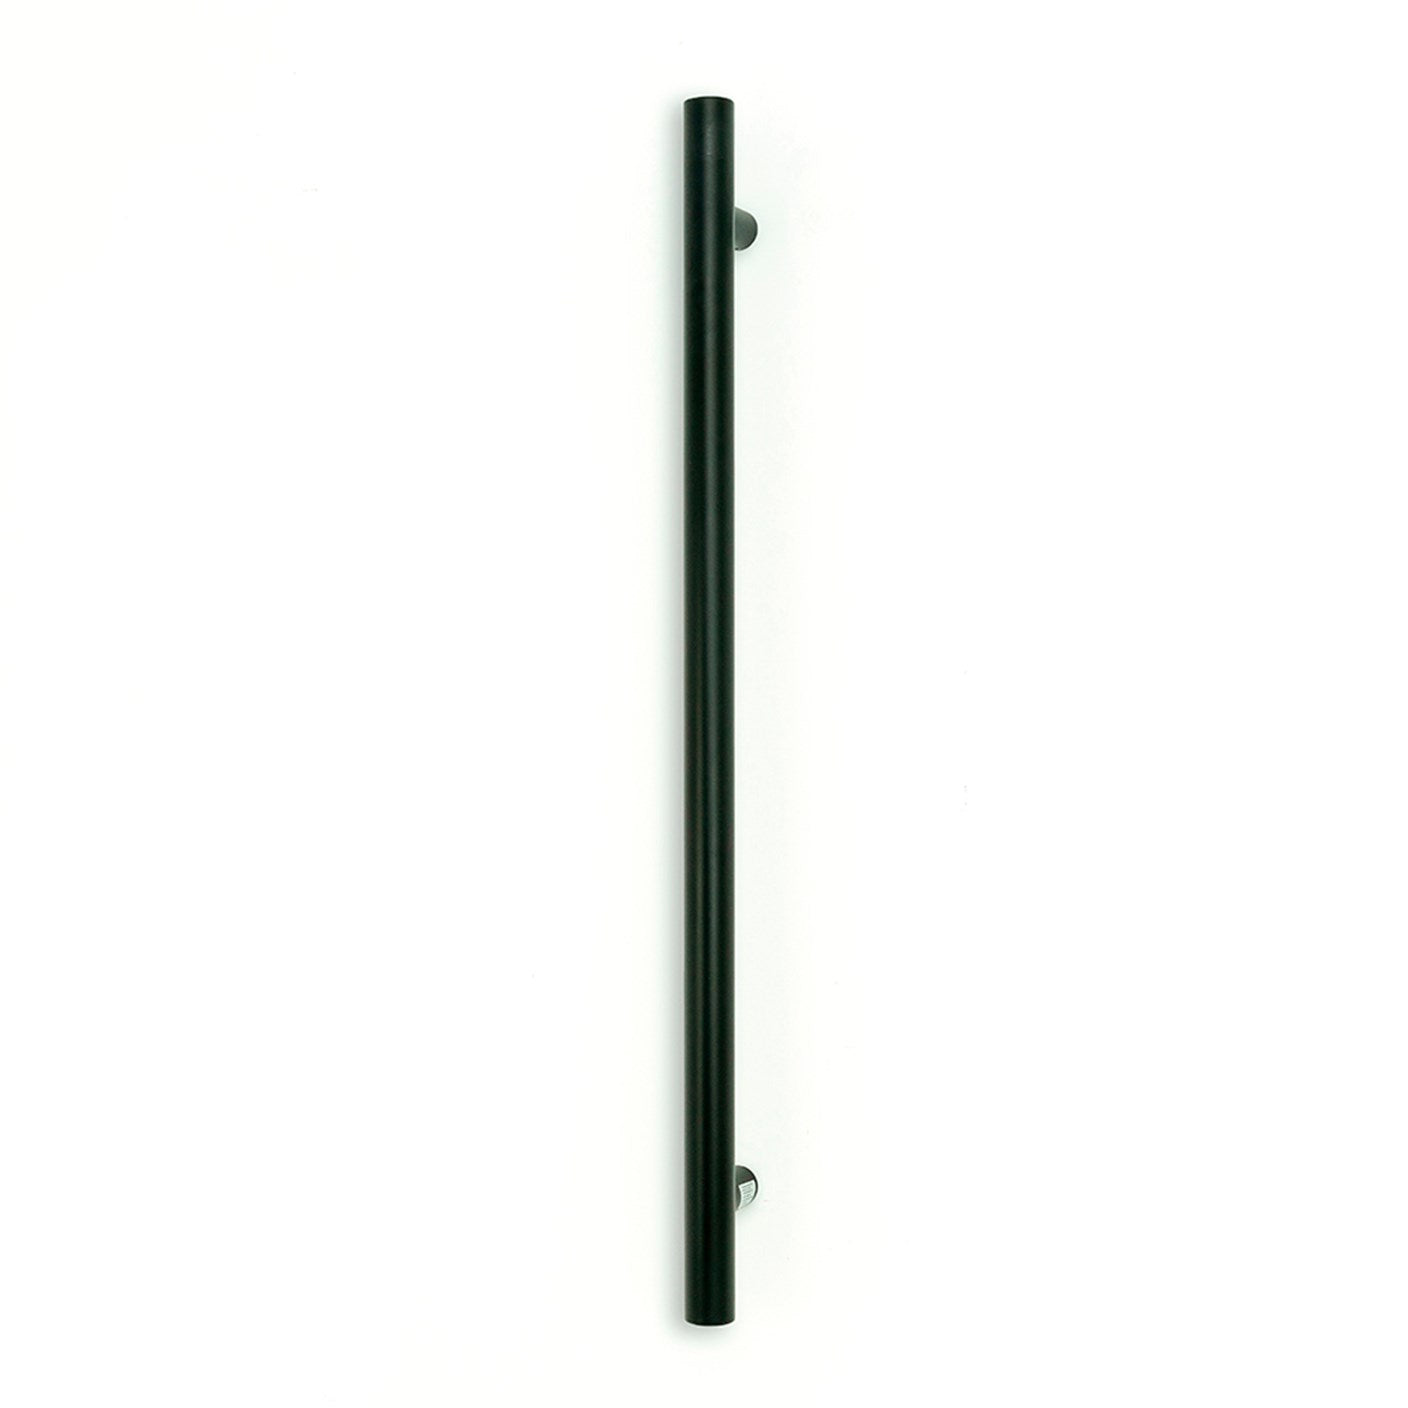 Radiant Heating Vertical Single Heated Towel Bar 40mm X 950mm, Black